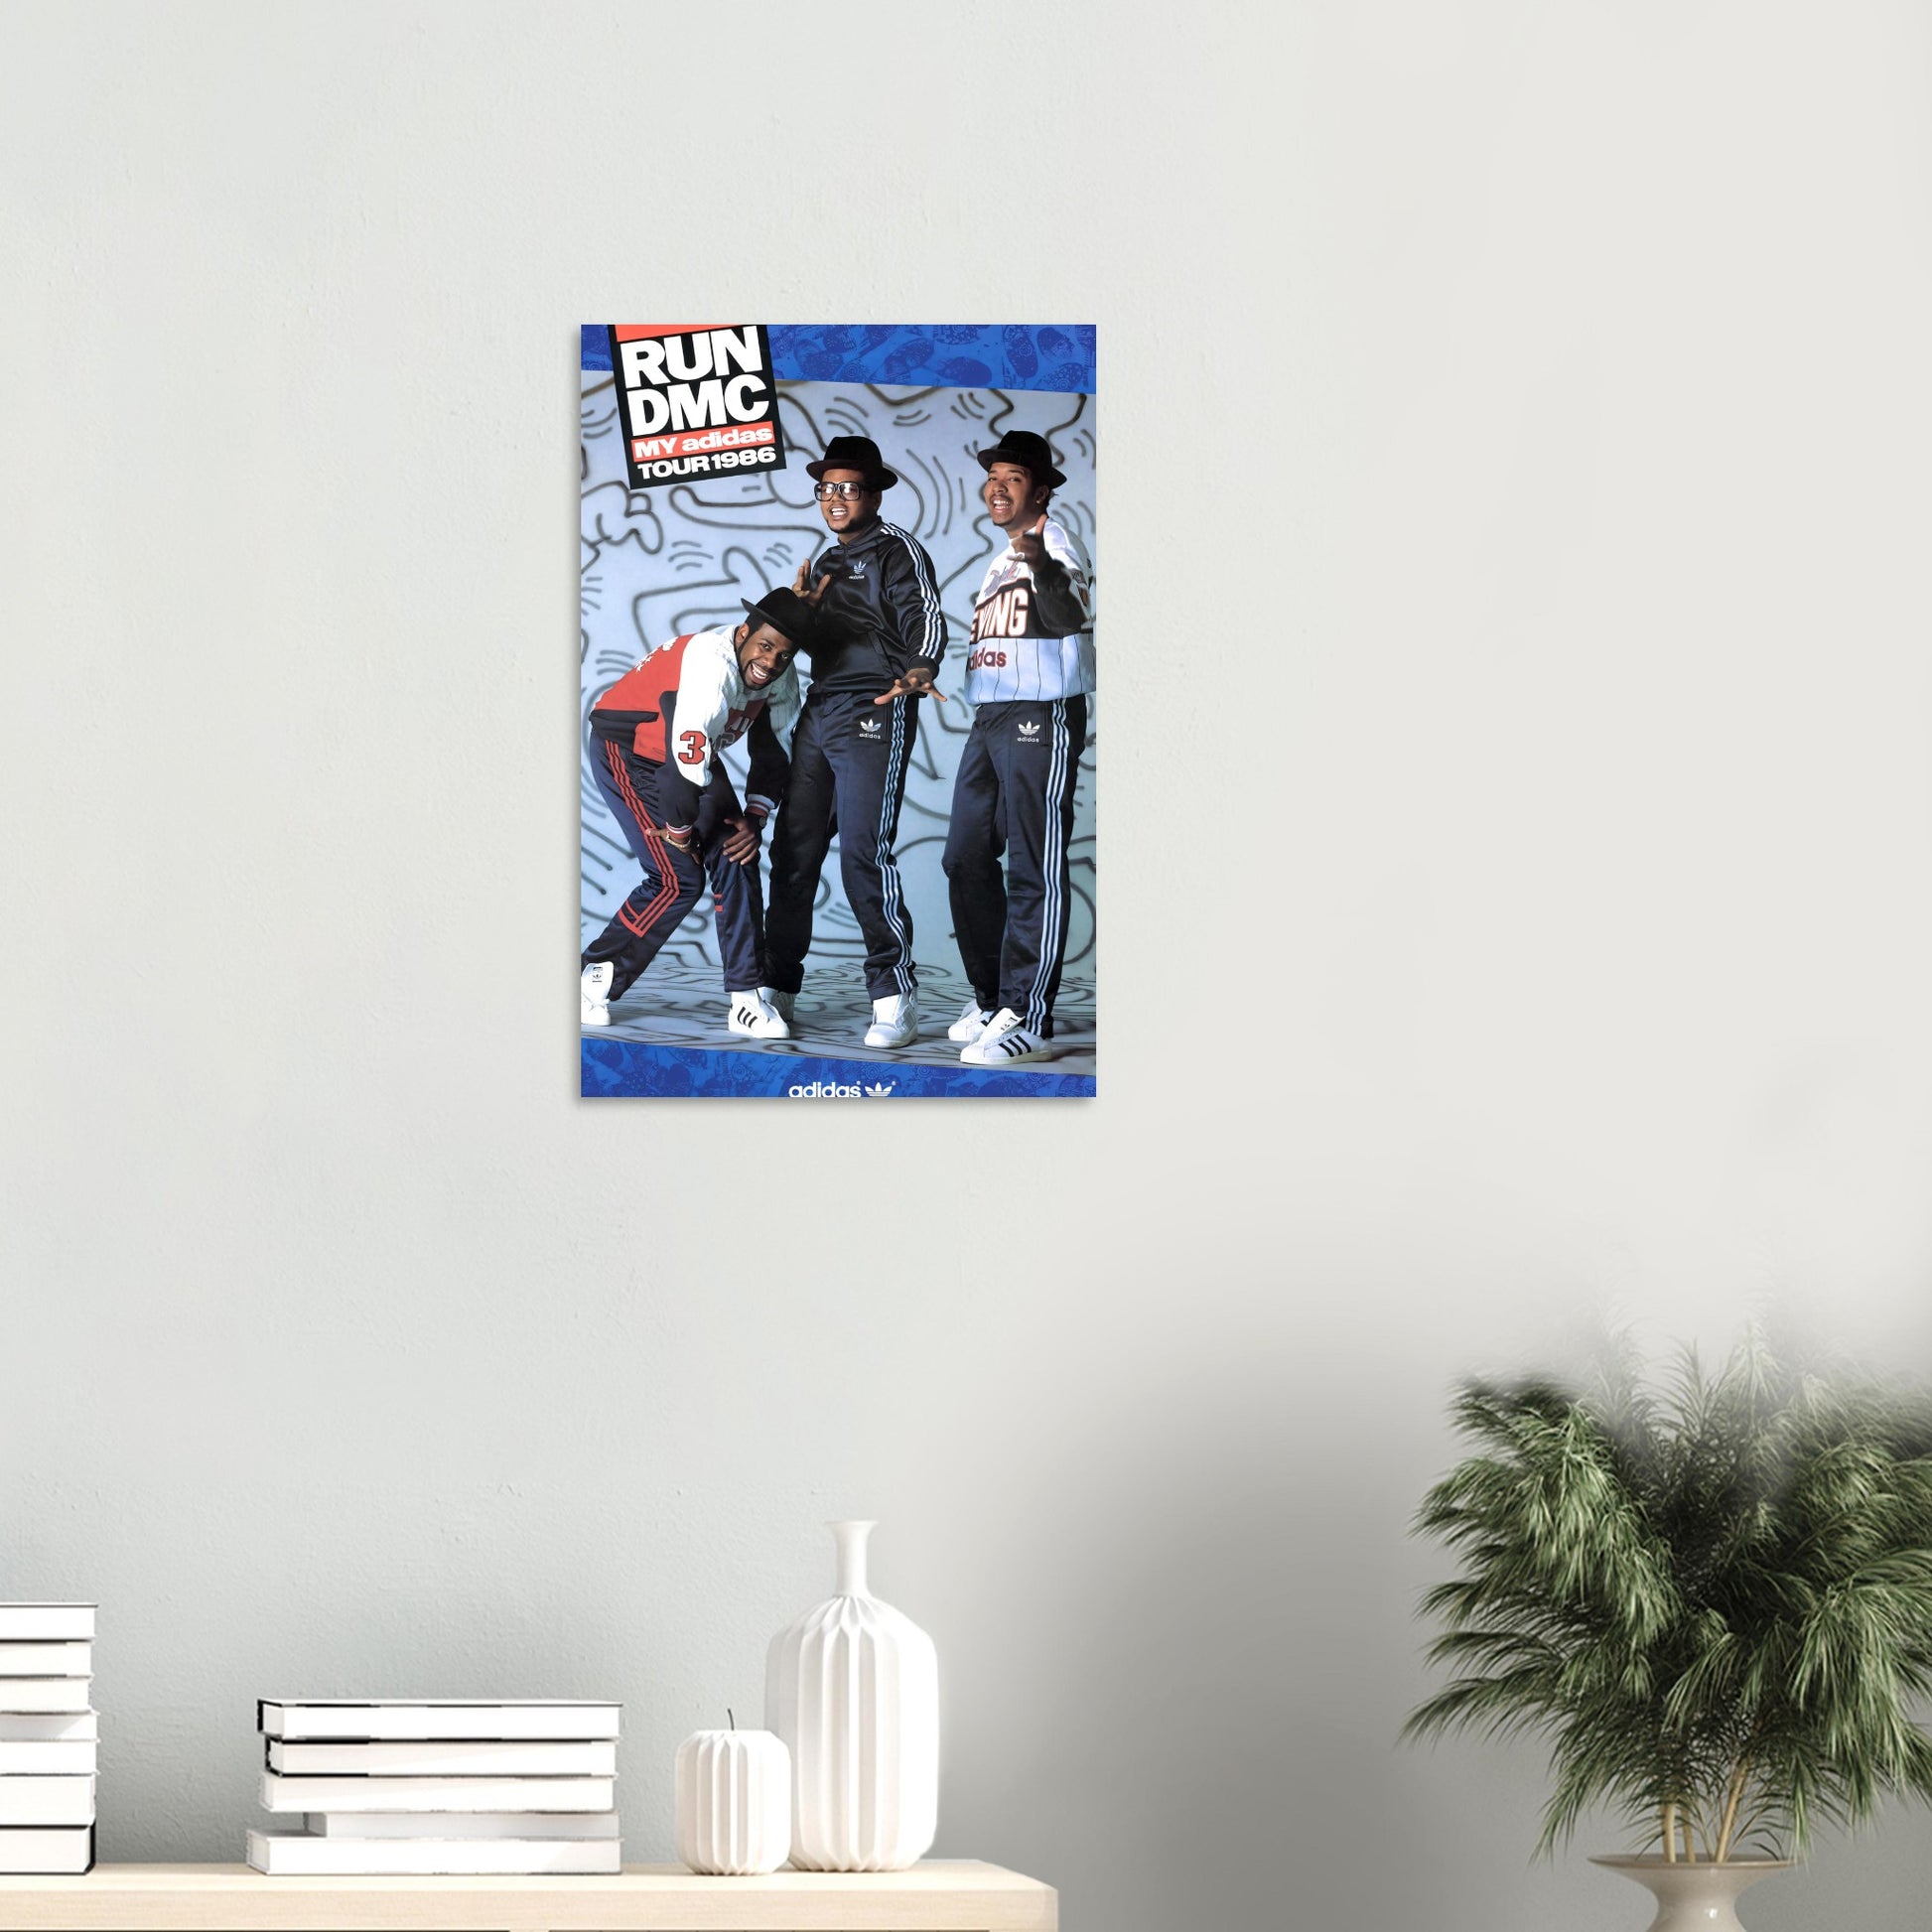 Retro Poster reprint on premium matte paper - Posterify